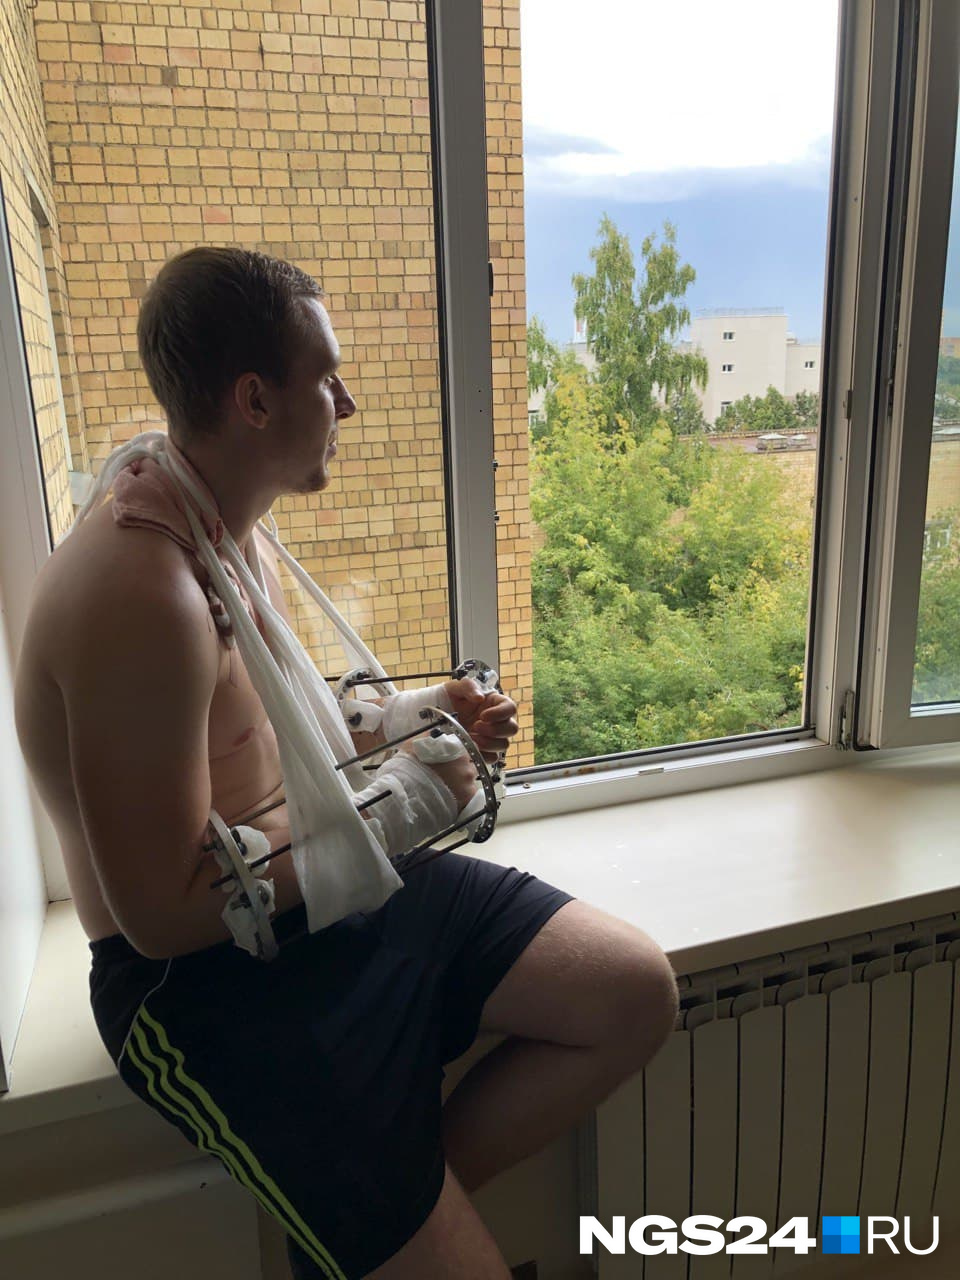 Дмитрий провел в больнице 2 месяца